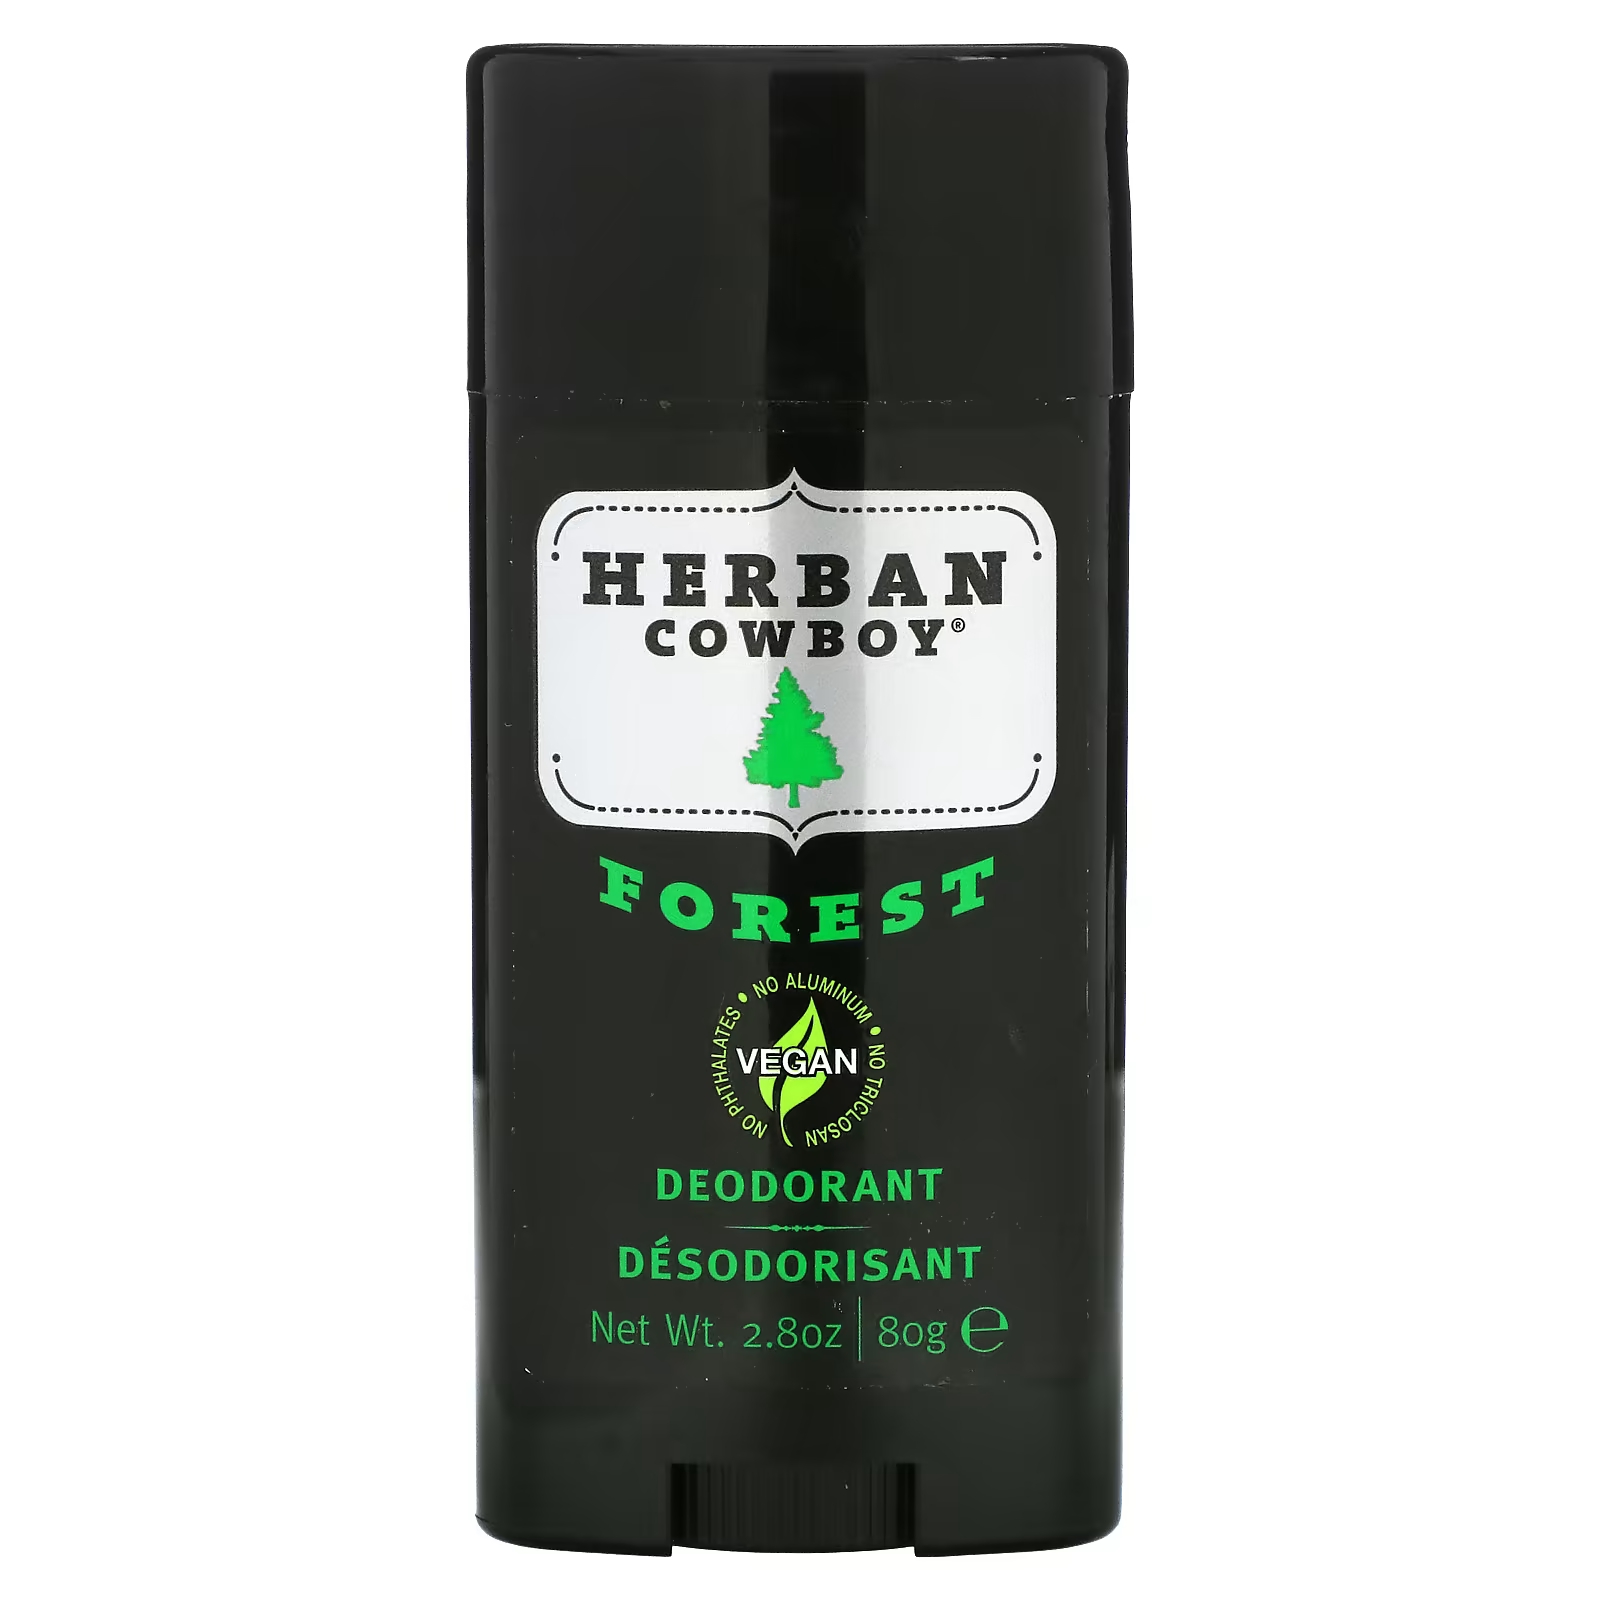 Дезодорант Herban Cowboy Forest herban cowboy пилированное мыло запах леса 5 унц 140 г